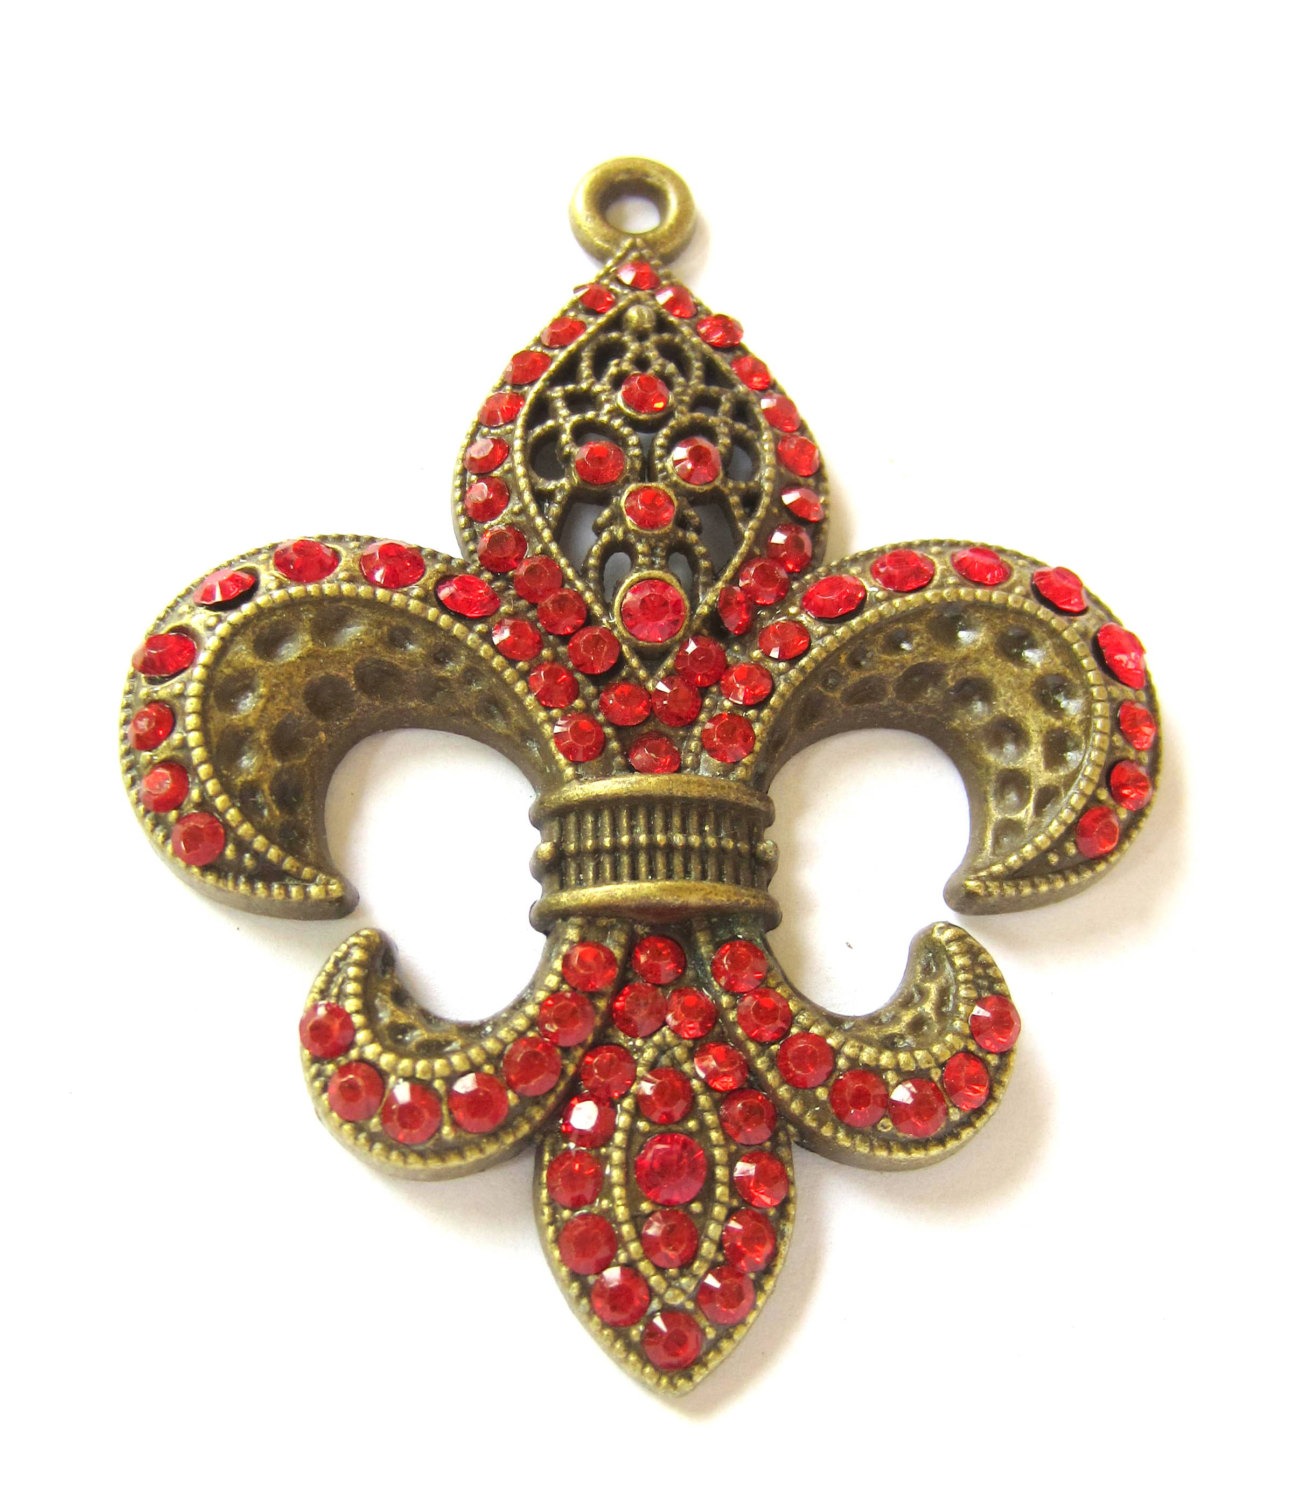 Focal Fluer De Lis pendant antique bronze charm red rhinestones jewelry enhancer 63mm x 82mm 7mm B0452 steampunk buy now online